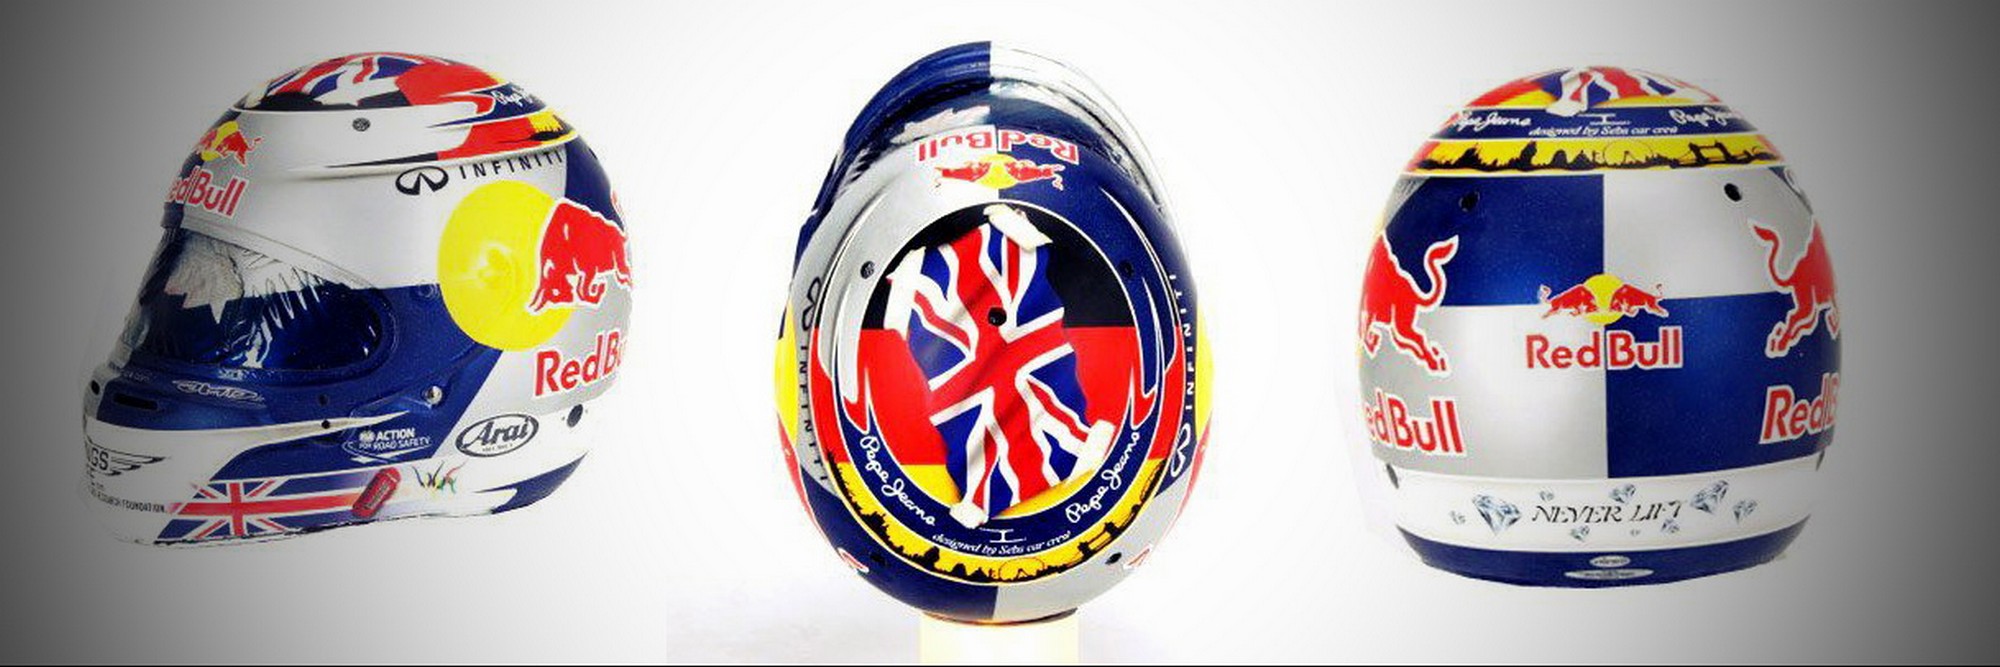 Шлем Себастьяна Феттеля на Гран-При Великобритании 2012 | 2012 British Grand Prix helmet of Sebastian Vettel